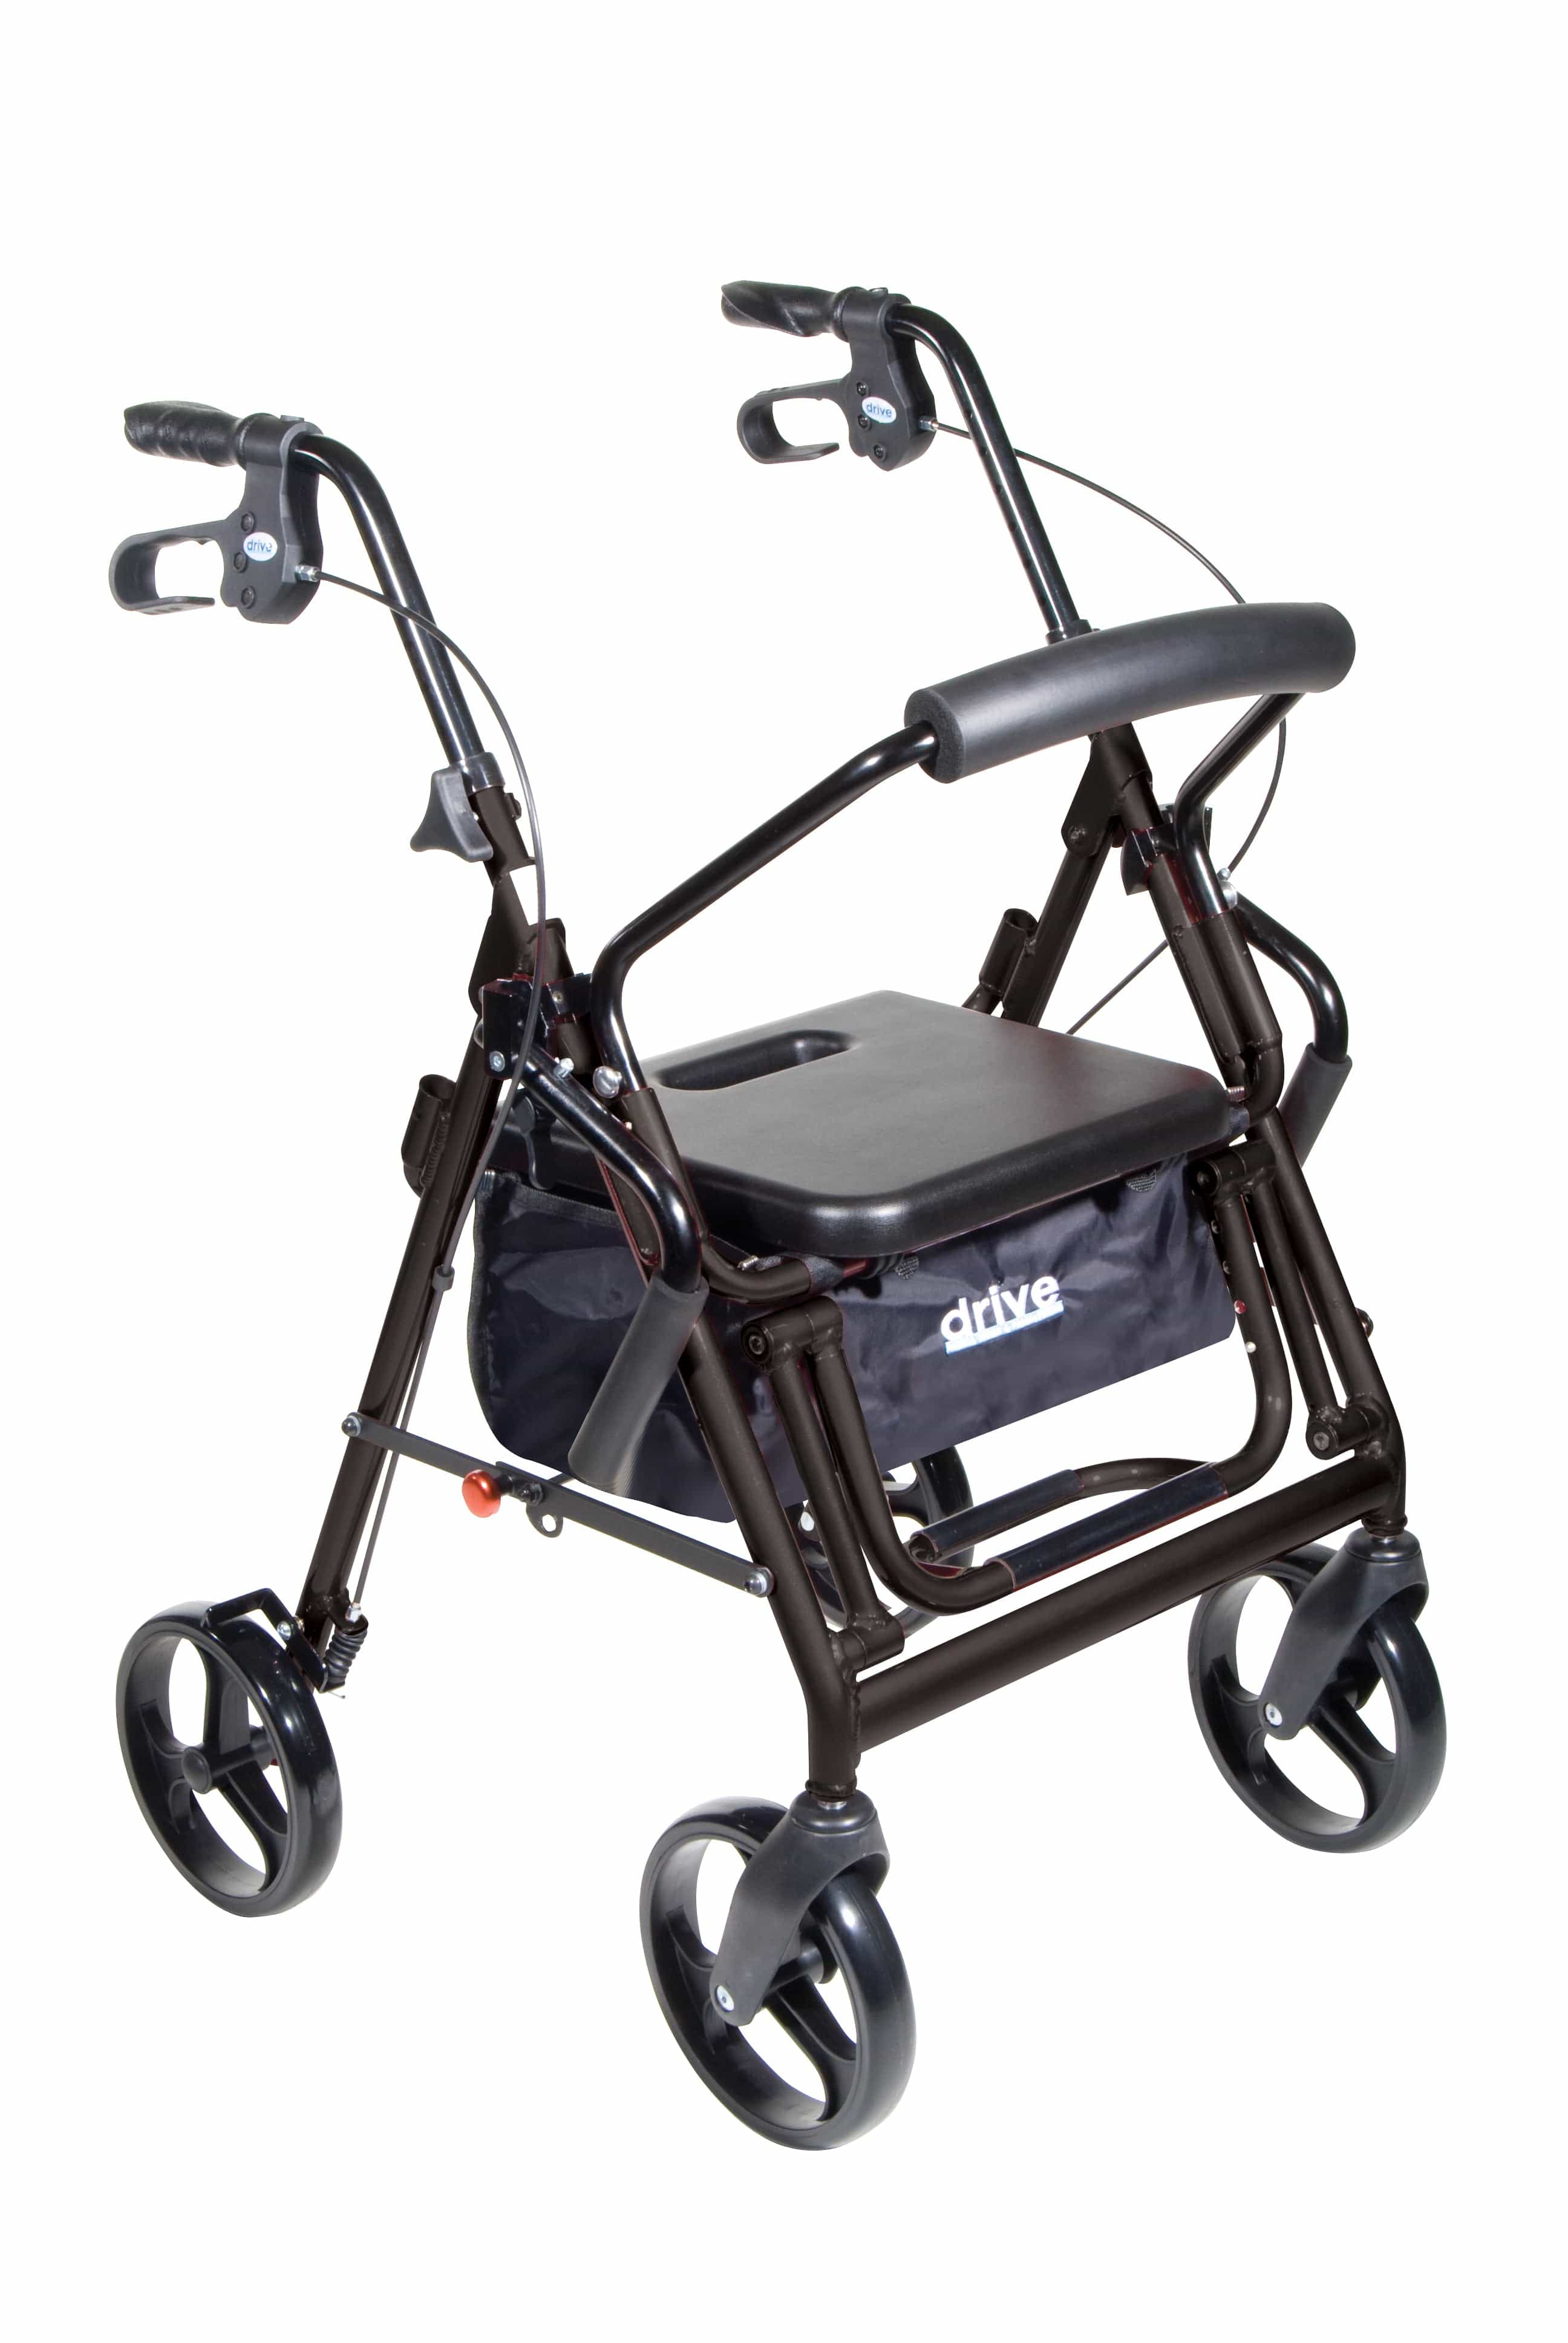 Drive Medical Drive Medical Duet Dual Function Transport Wheelchair Rollator Rolling Walker 795bk